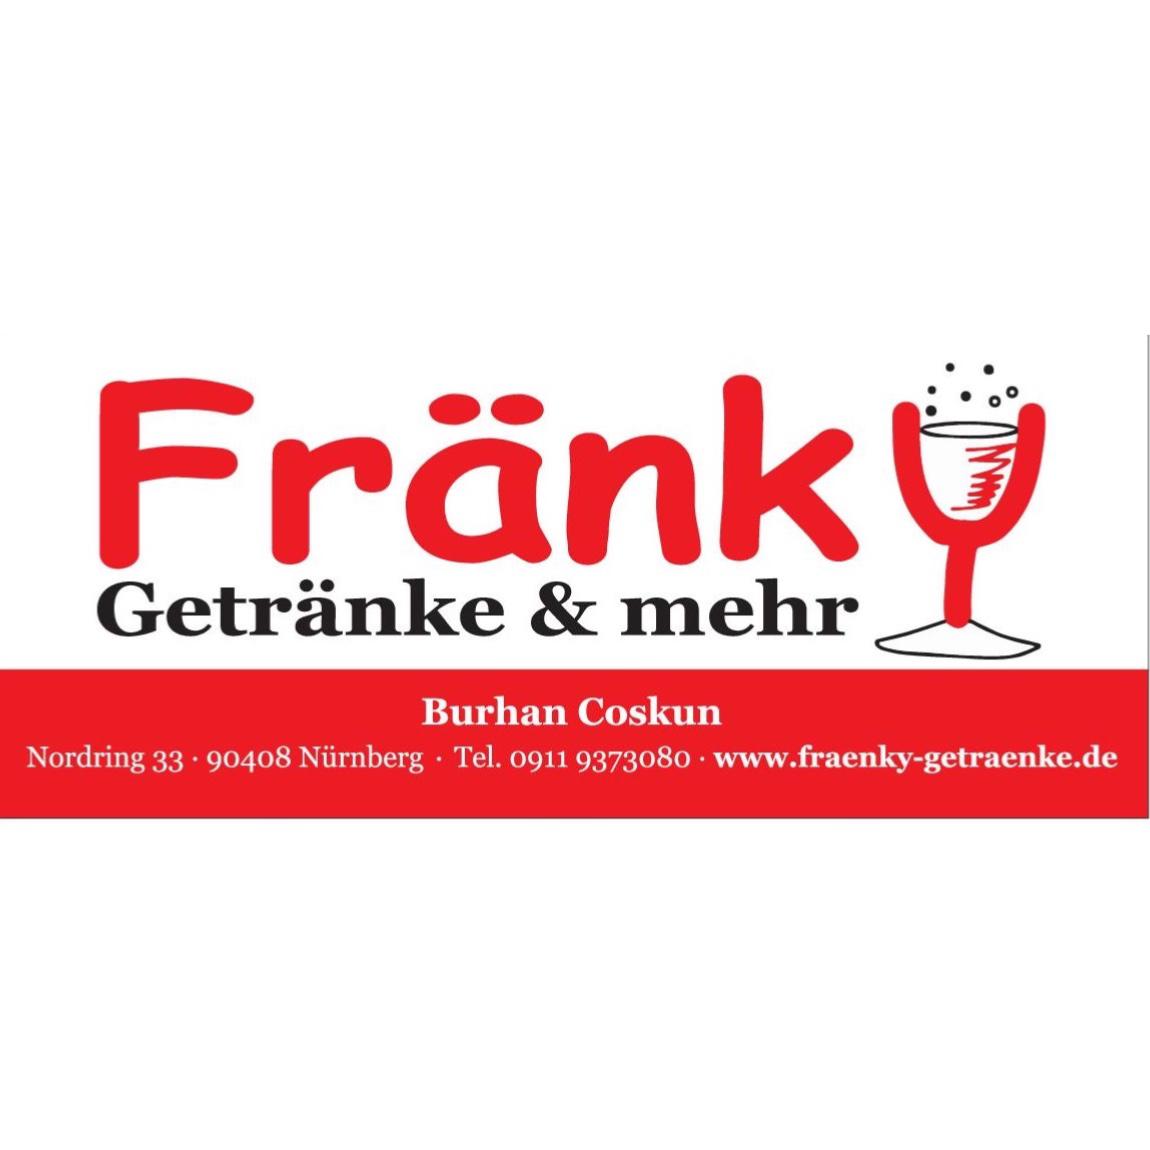 Fränky Nordring Inh. Burhan Coskun in Nürnberg - Logo